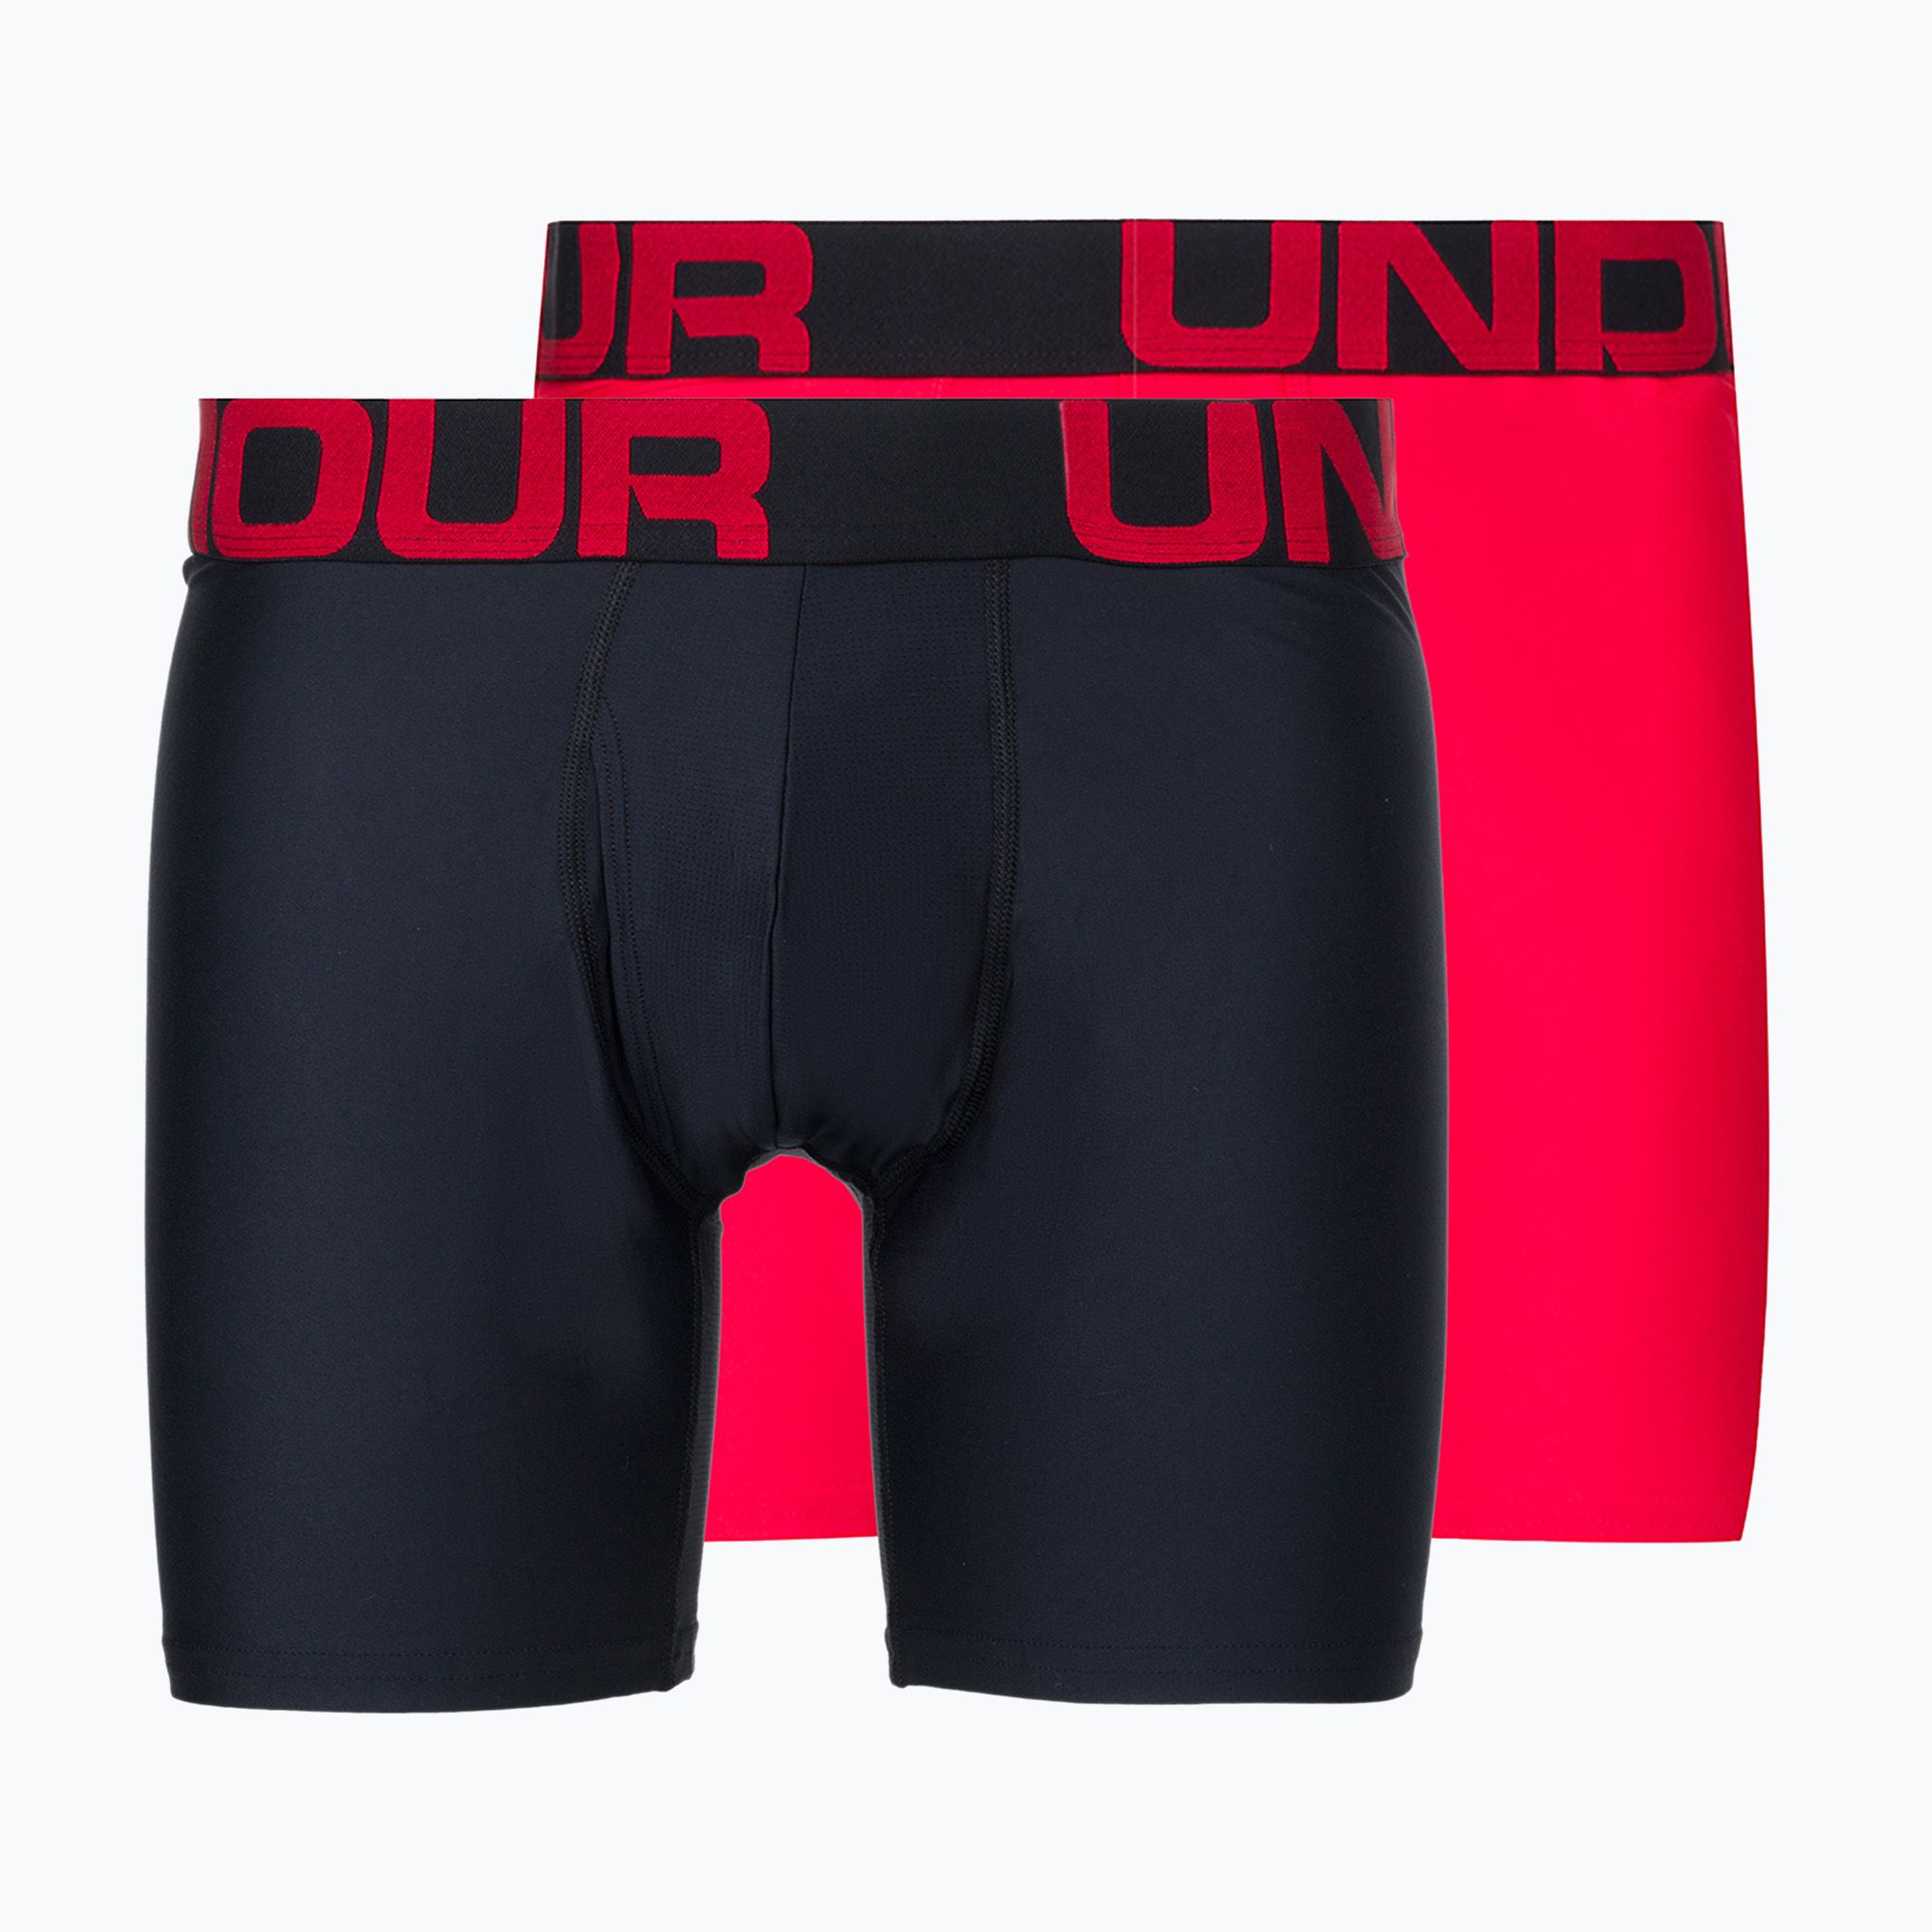 Under Armour 1363619 Size XL Men's Underwear - Black (2 Pack) for sale  online